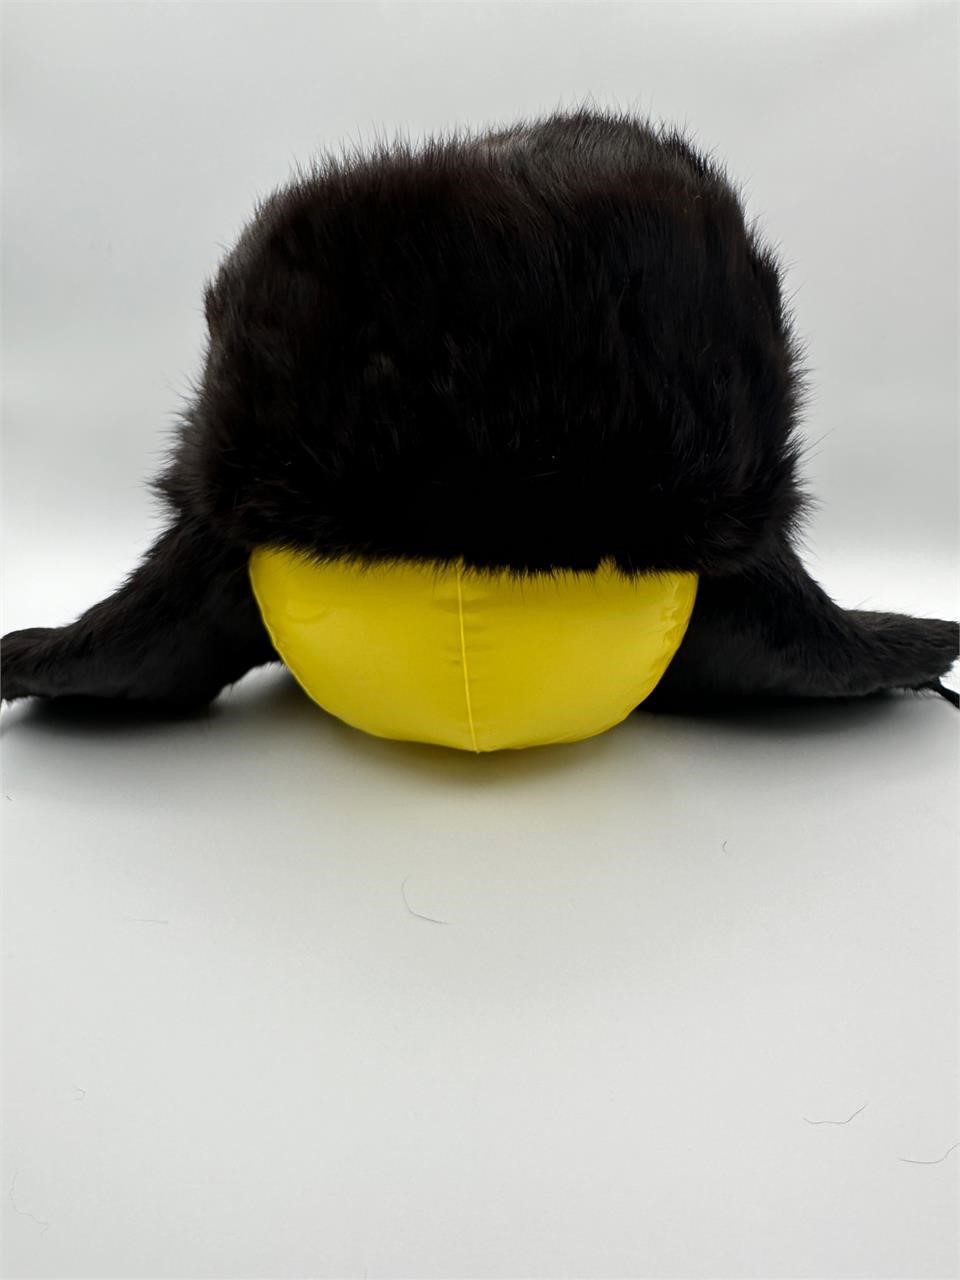 Vintage Fur Bomber Hat by Pot Pphot